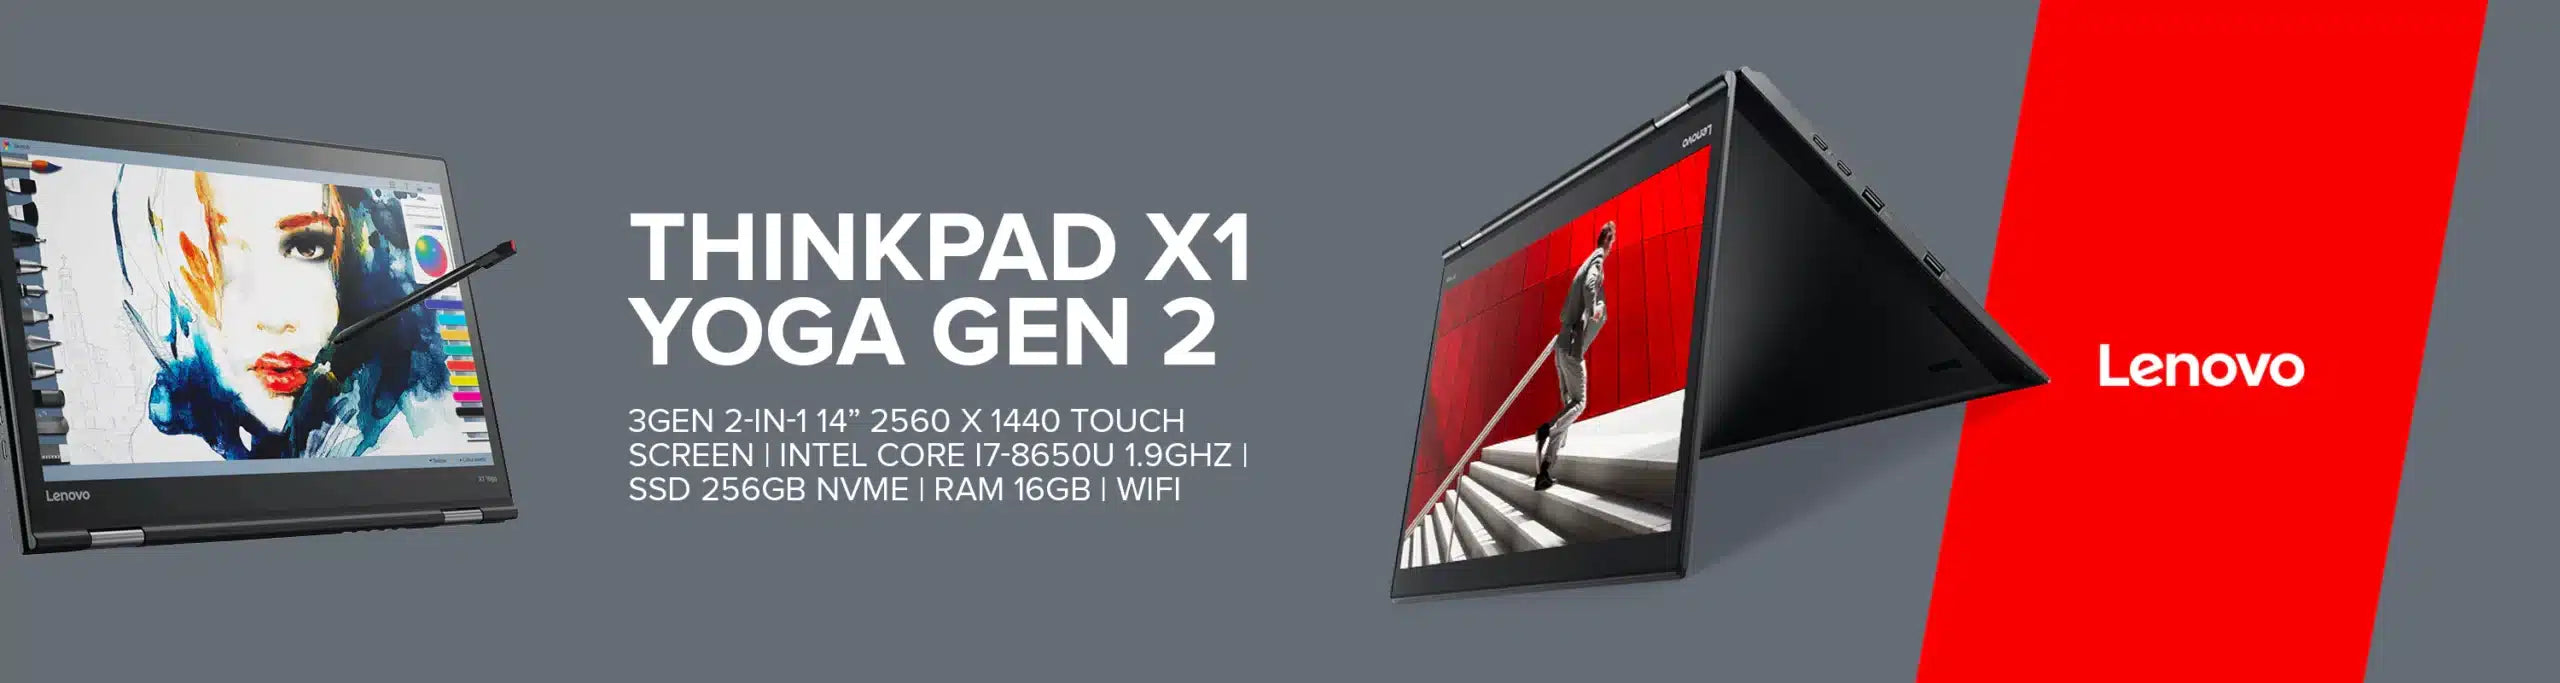 Lenovo ThinkPad X1 Yoga 2 3Gen 2